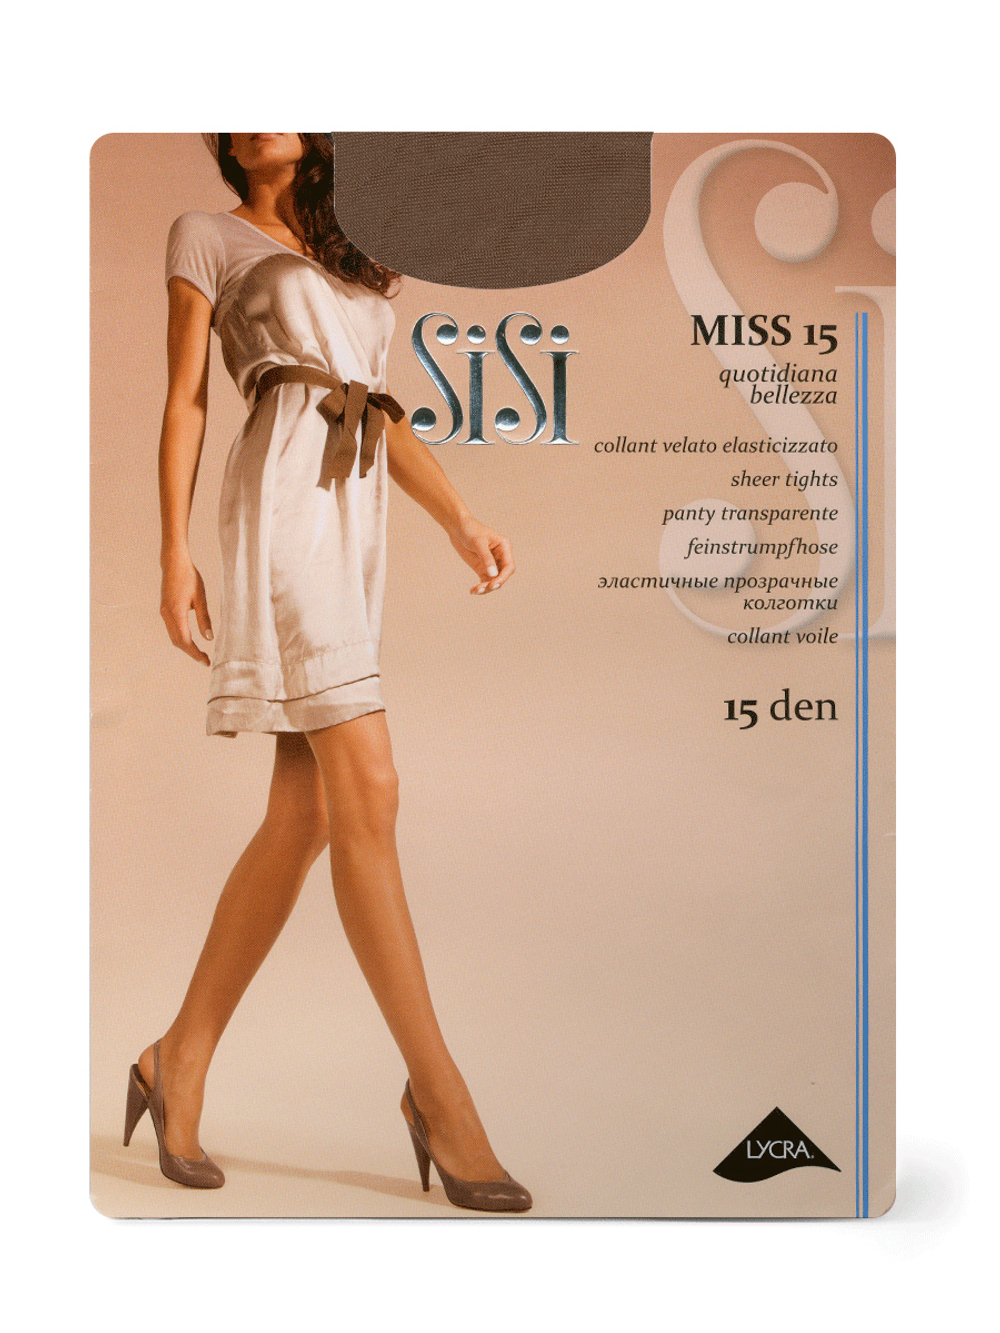 Sisi Miss 15